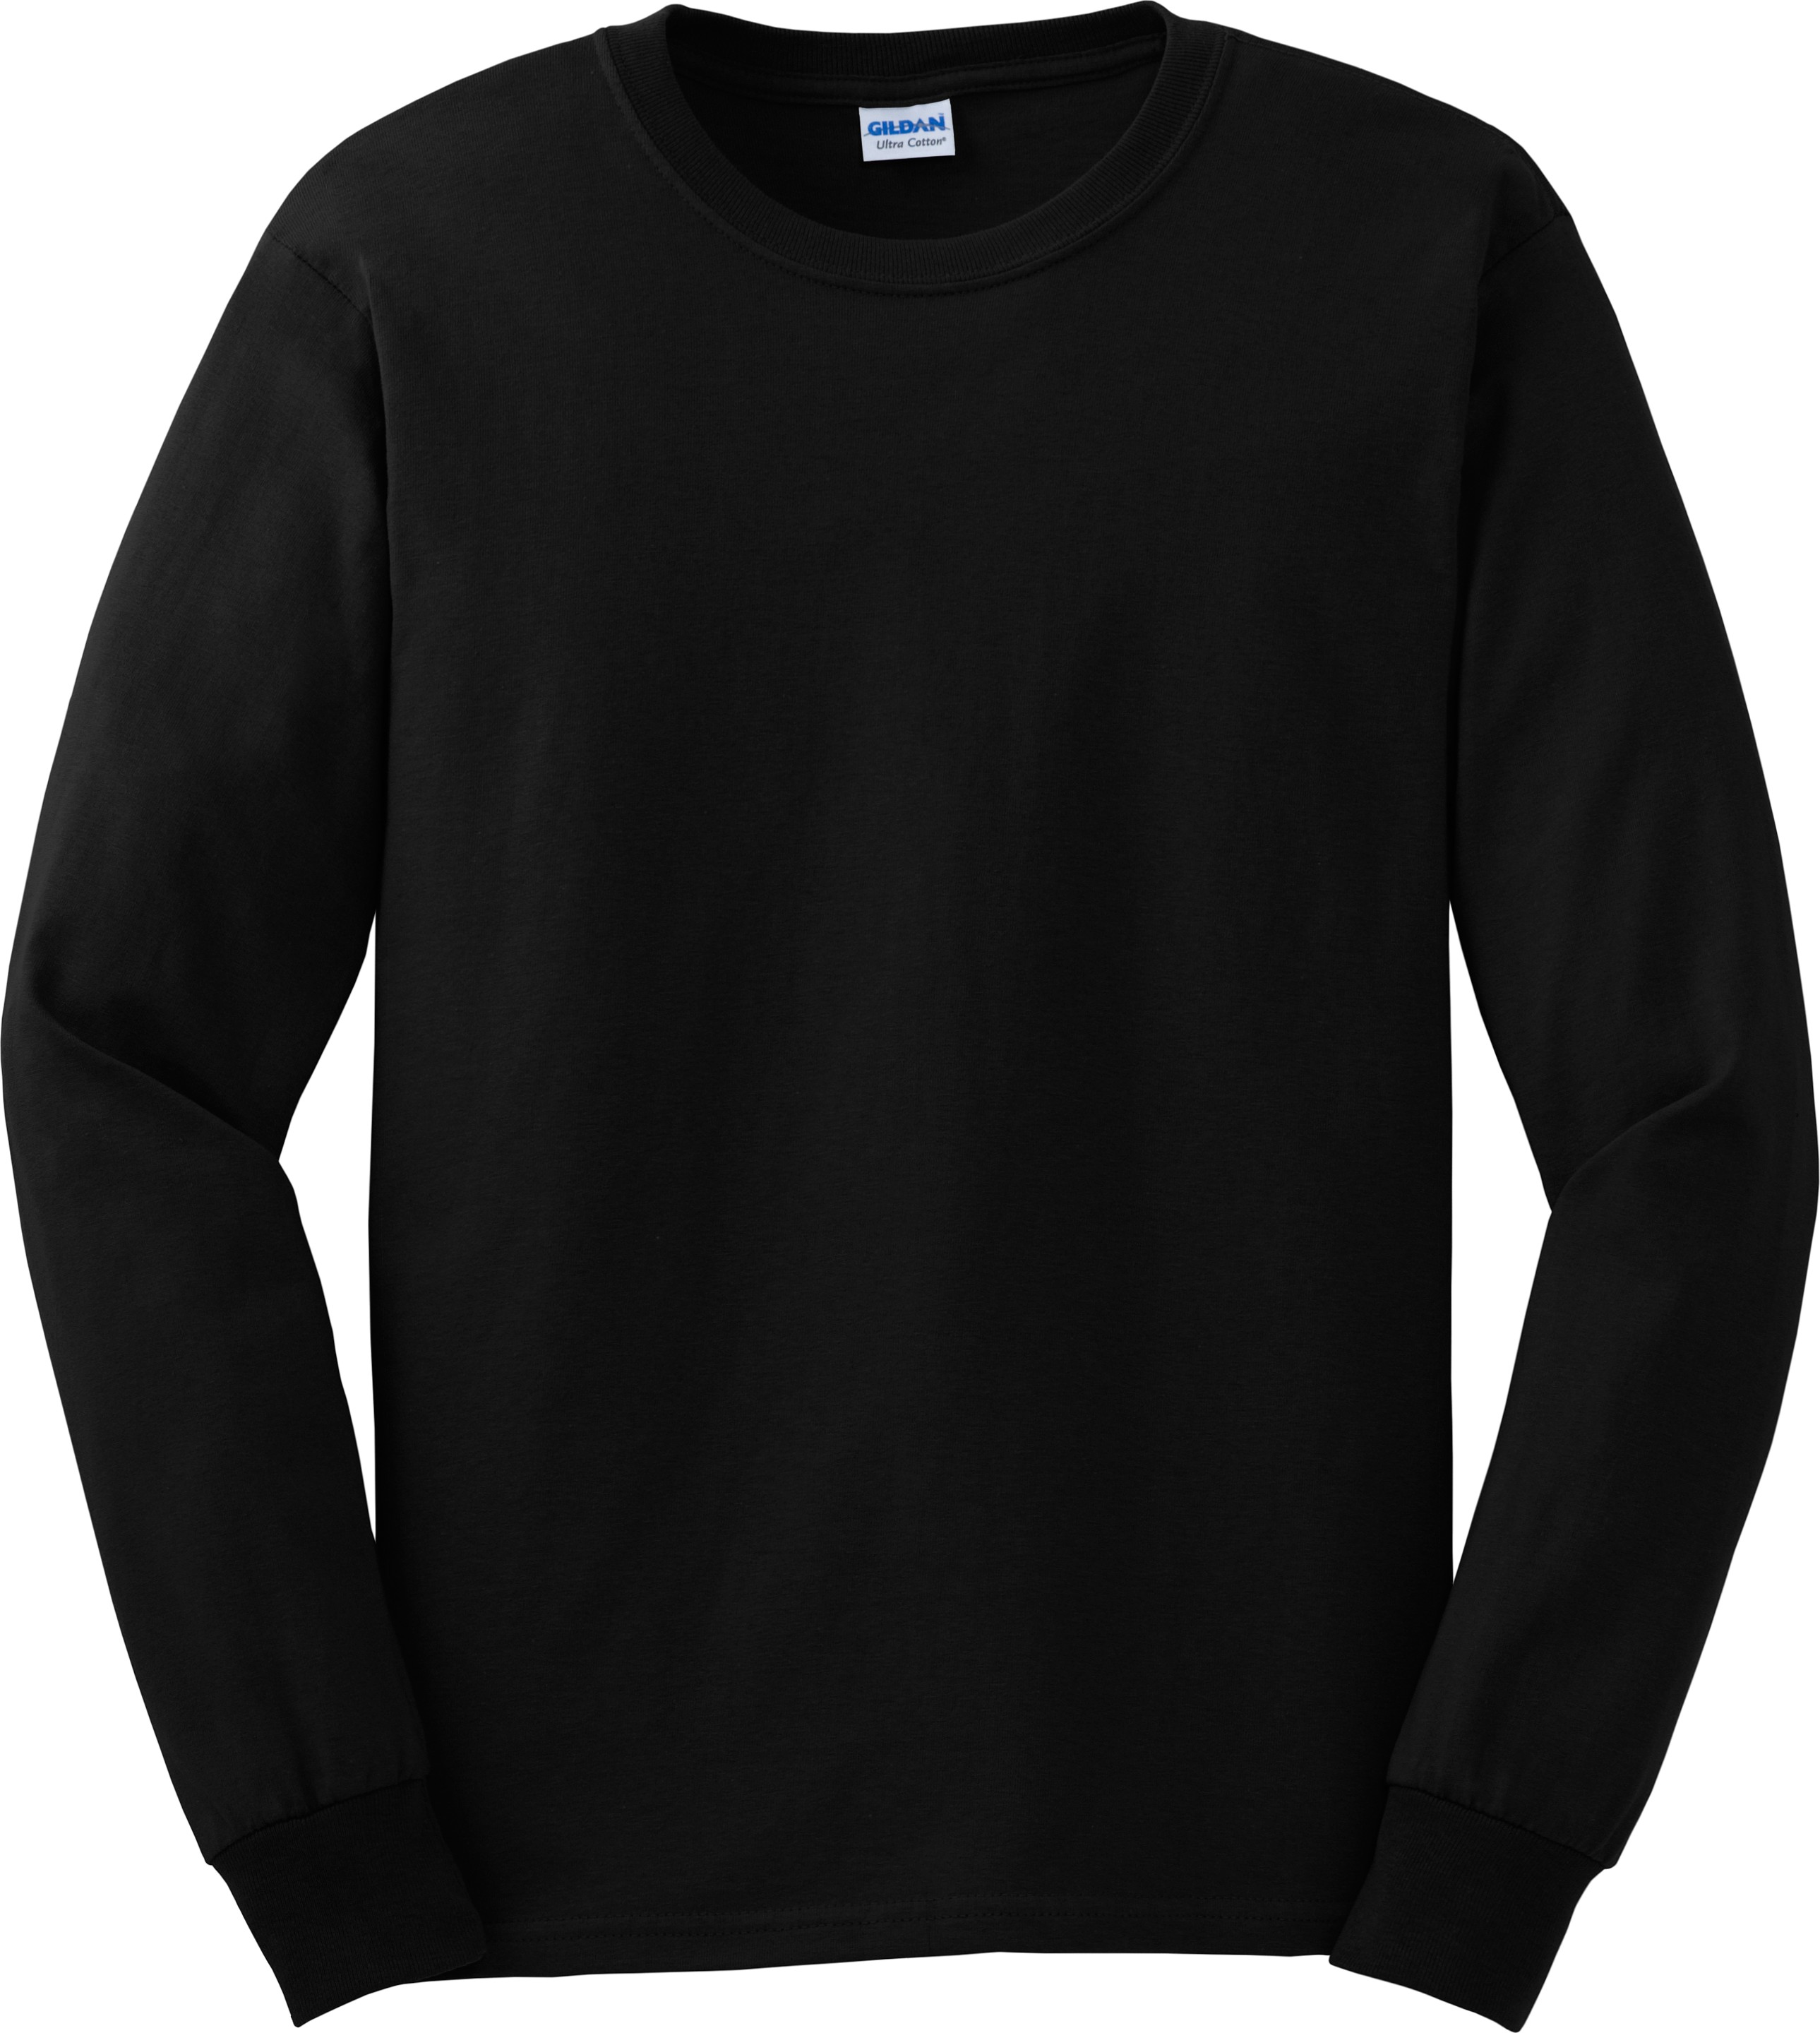 6431+ Black Long Sleeve T Shirt Template Popular Mockups Best Free